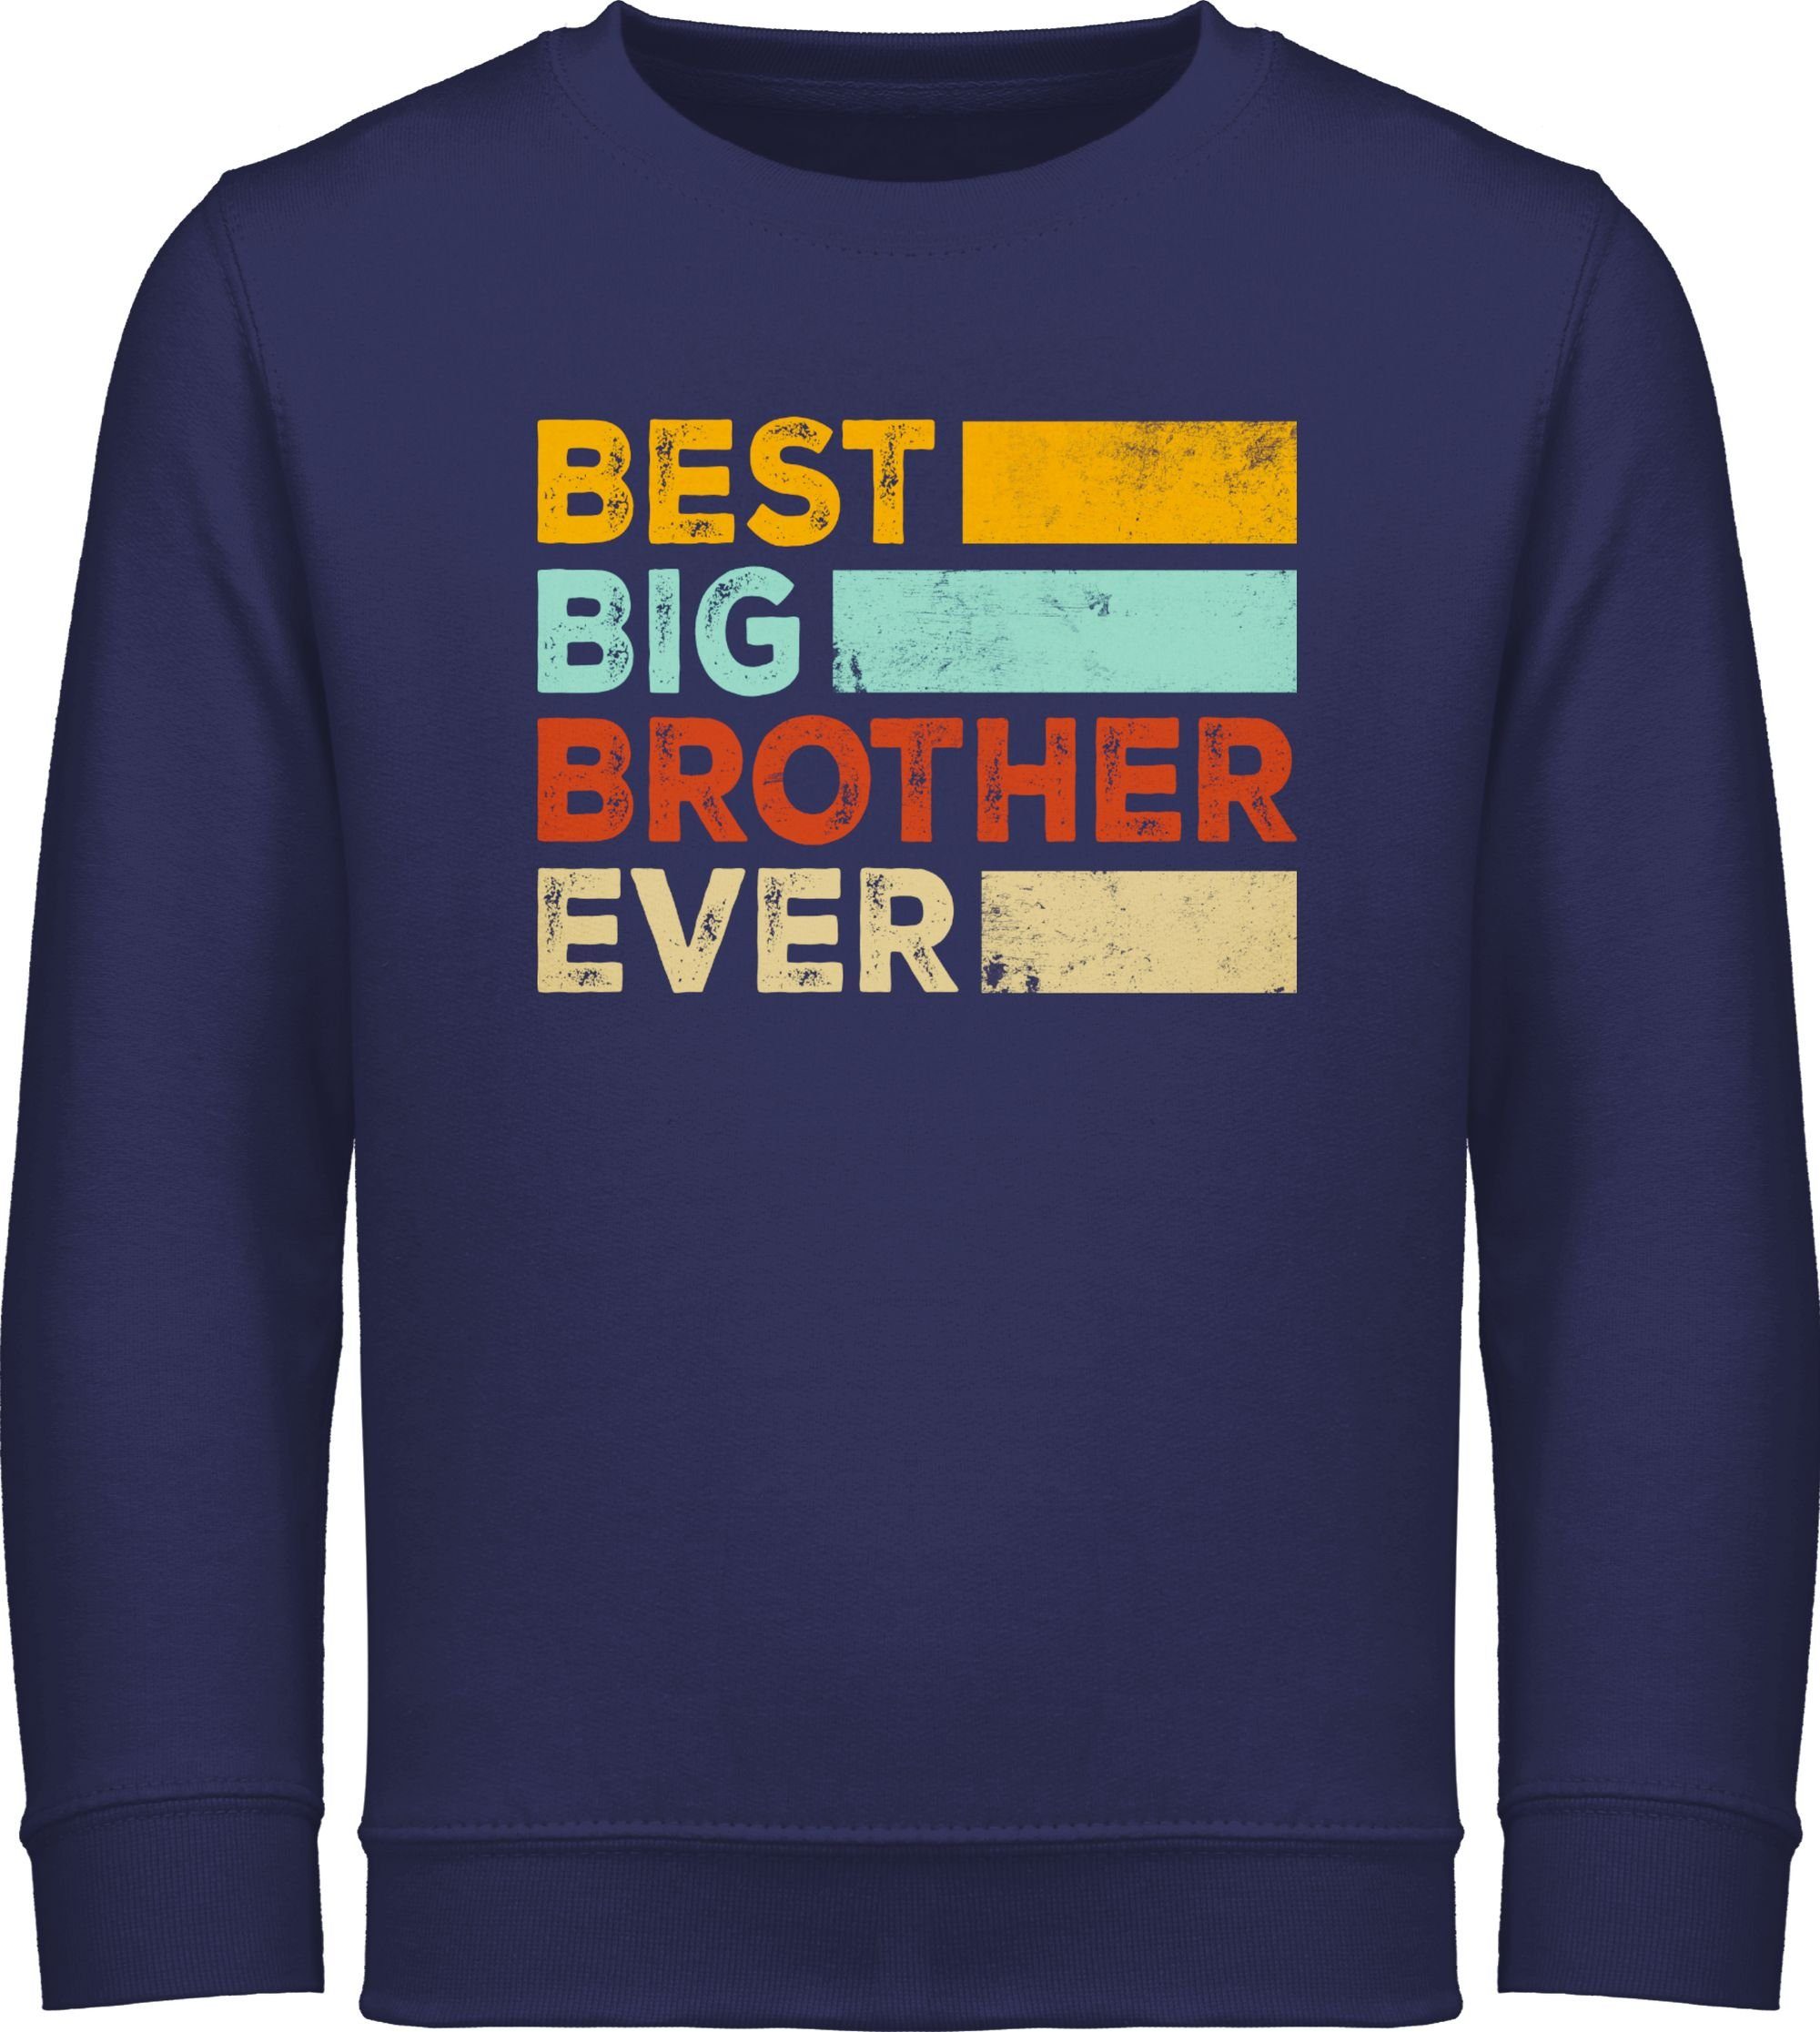 Bruder großer 1 Brother Ever aller Bruder Blau Best Großer Shirtracer Navy Sweatshirt Zeiten Bester Big Geschenk